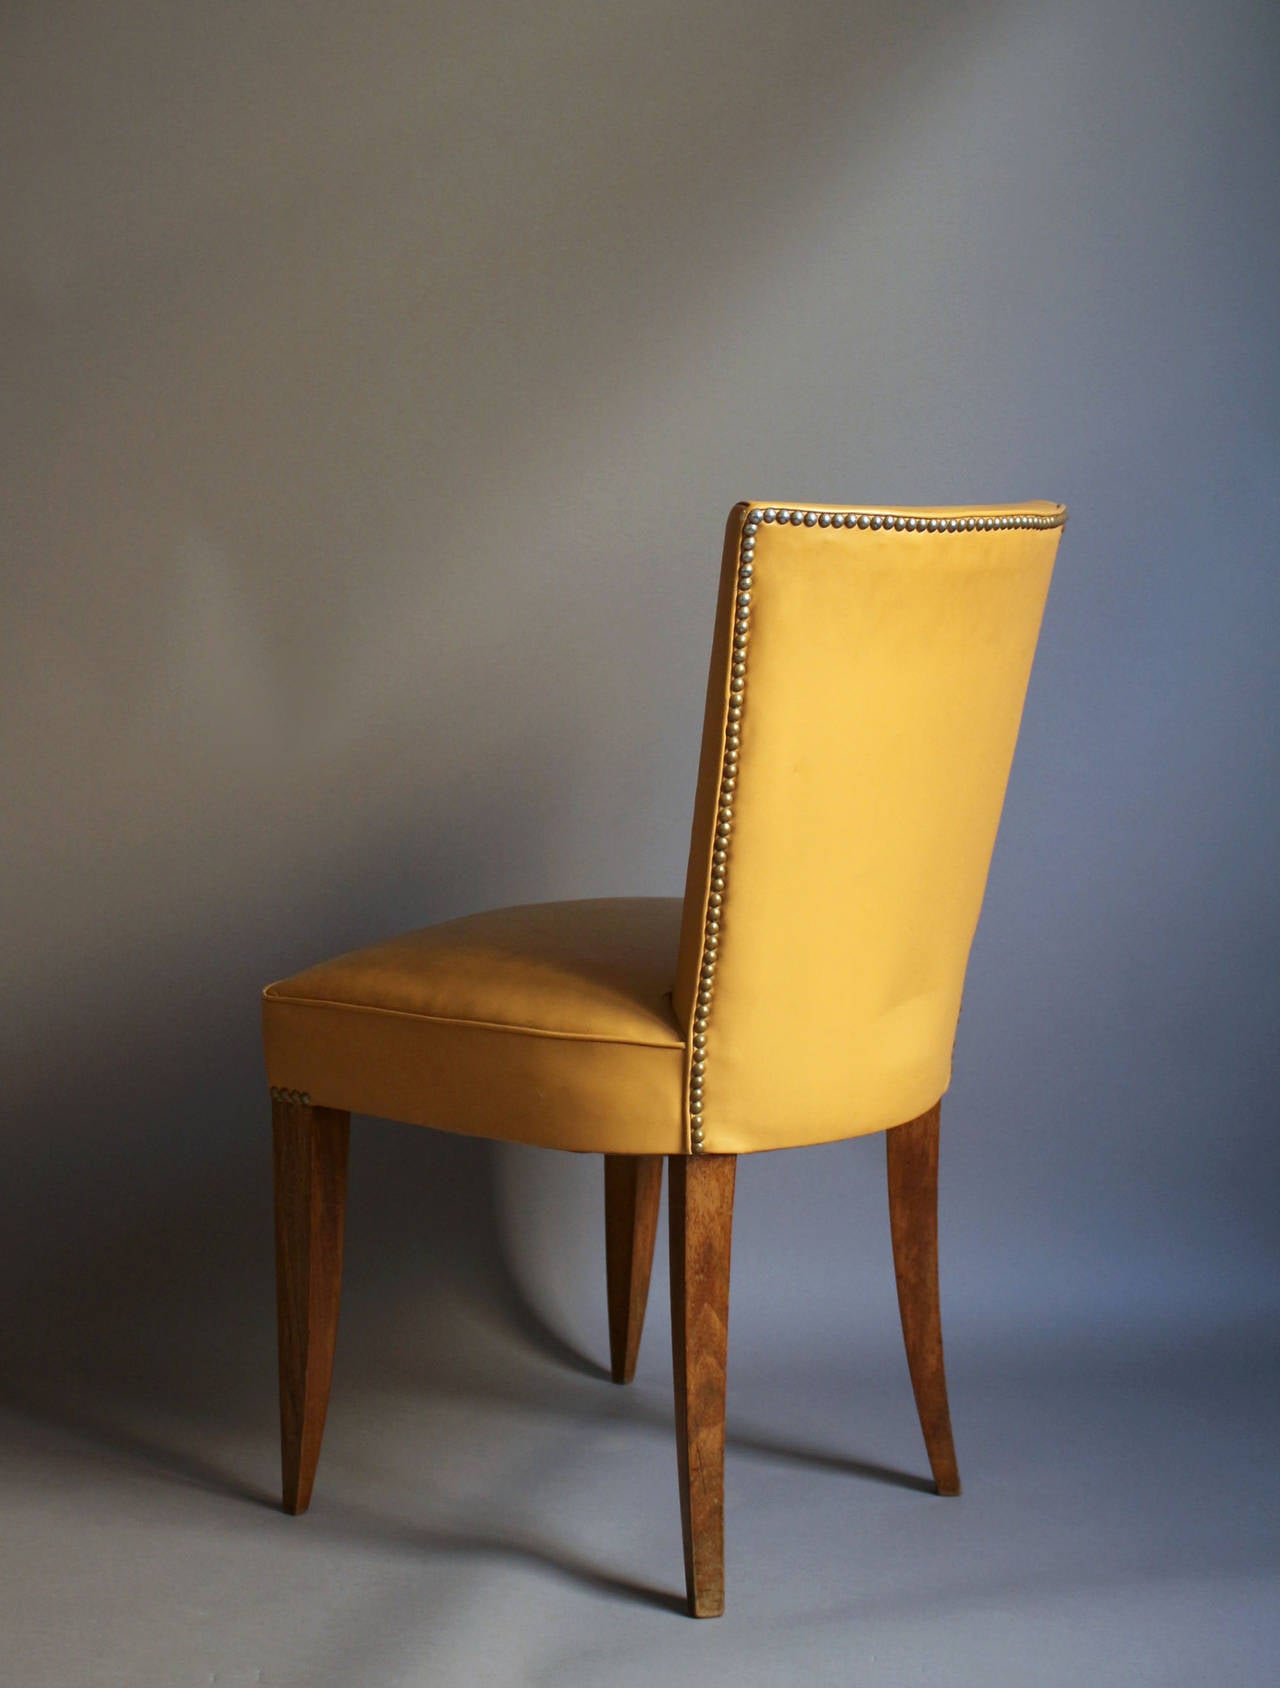 7 Fine French Art Deco Mahogany Chairs 1